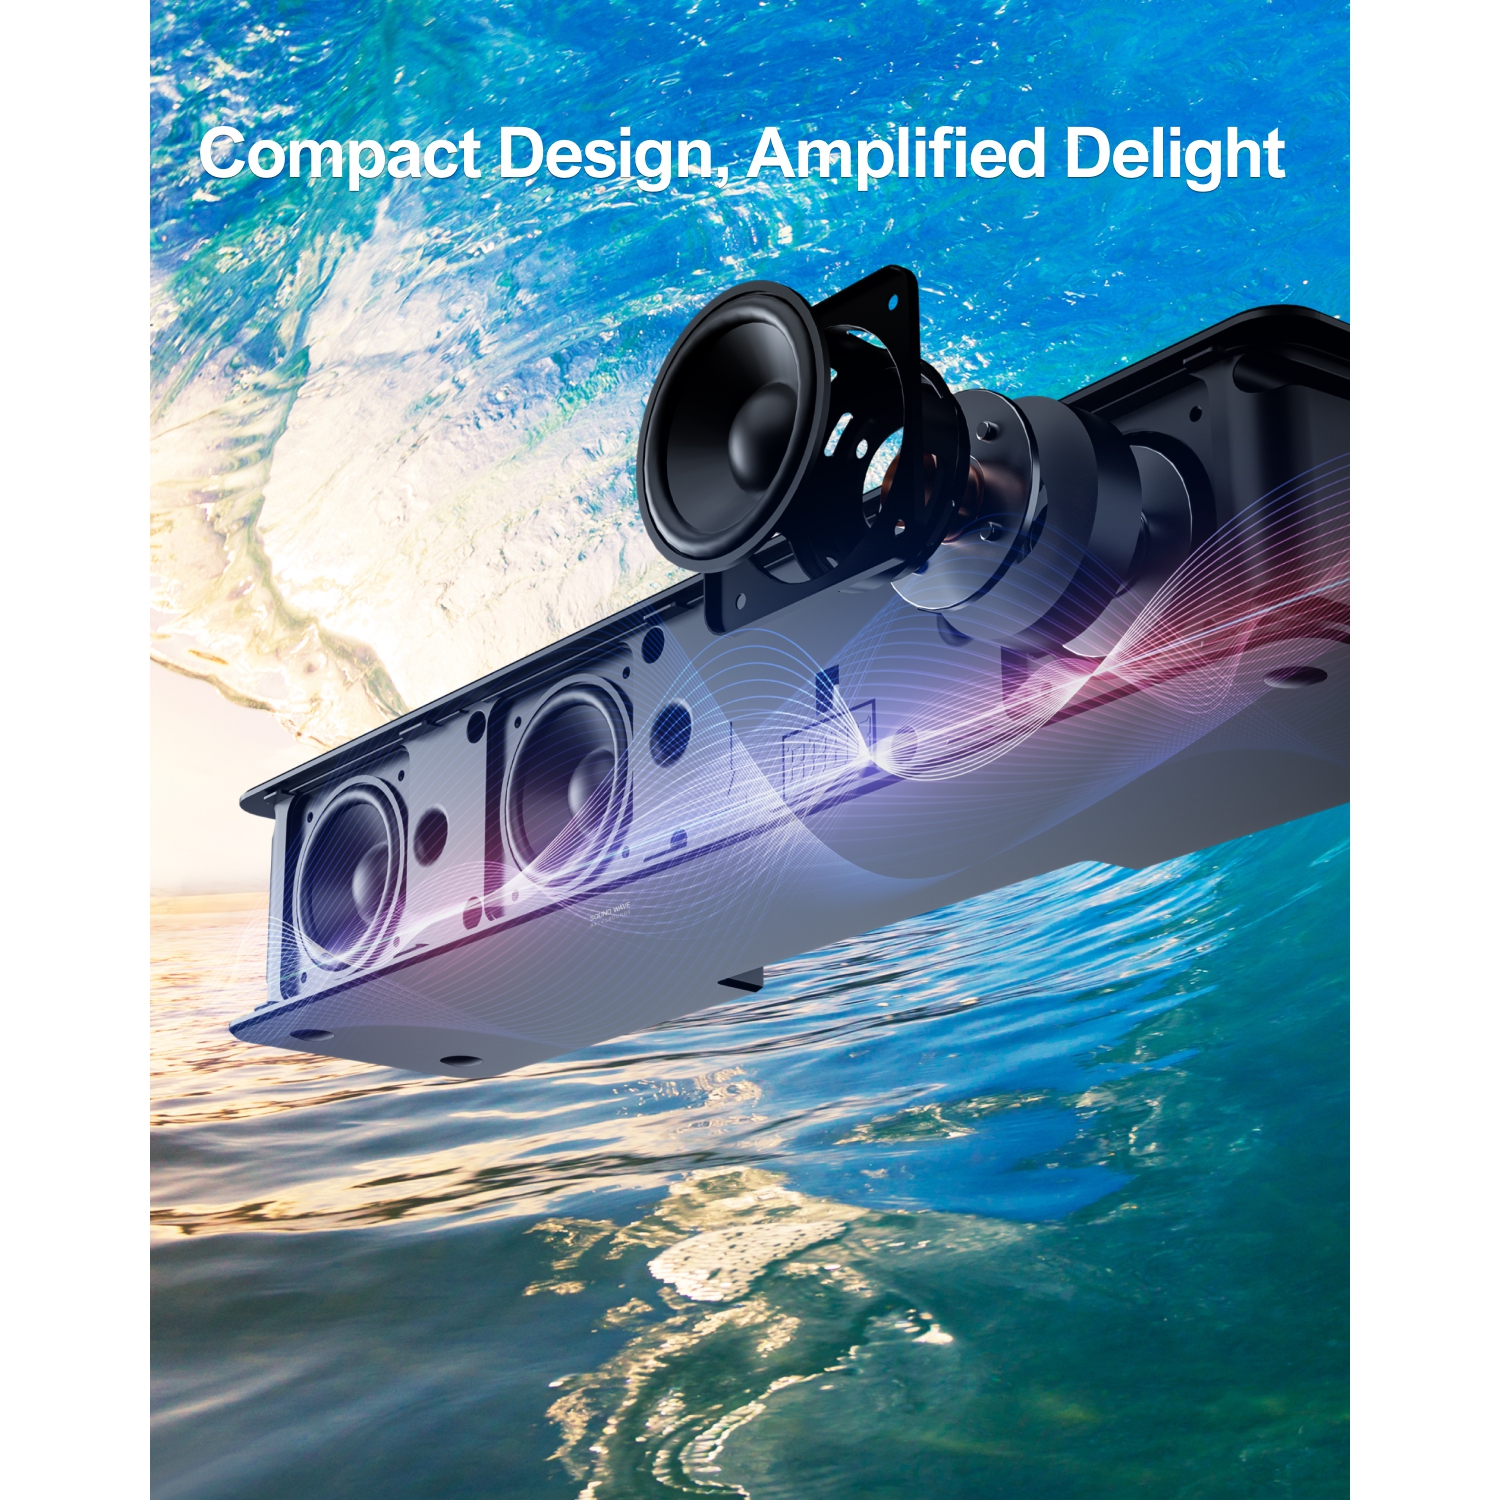 Enter To Win an ULTIMEA Poseidon D60 5.1 Dolby Atmos Surround Soundbar